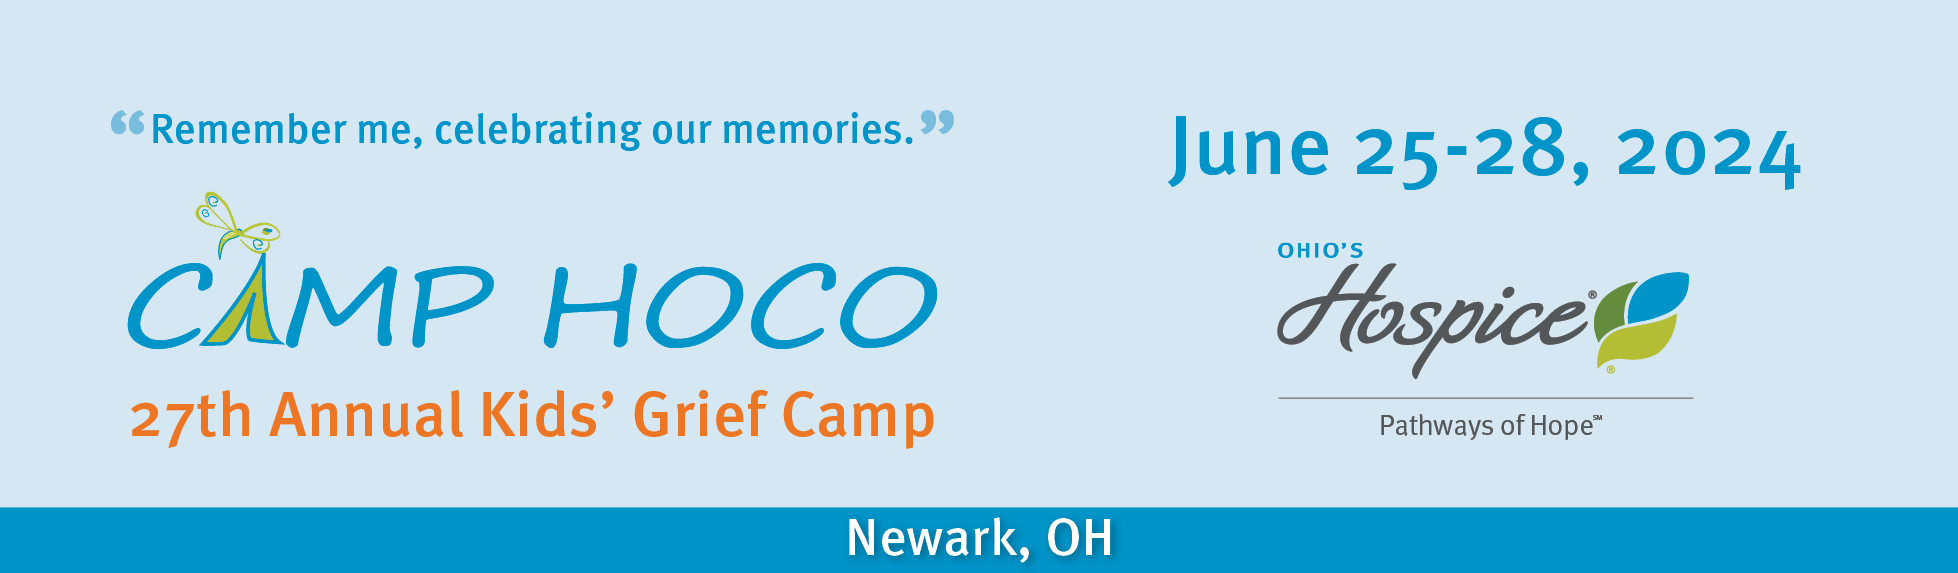 Ohio's Hospice of Camp HOCO June 25-28 Newark, OH